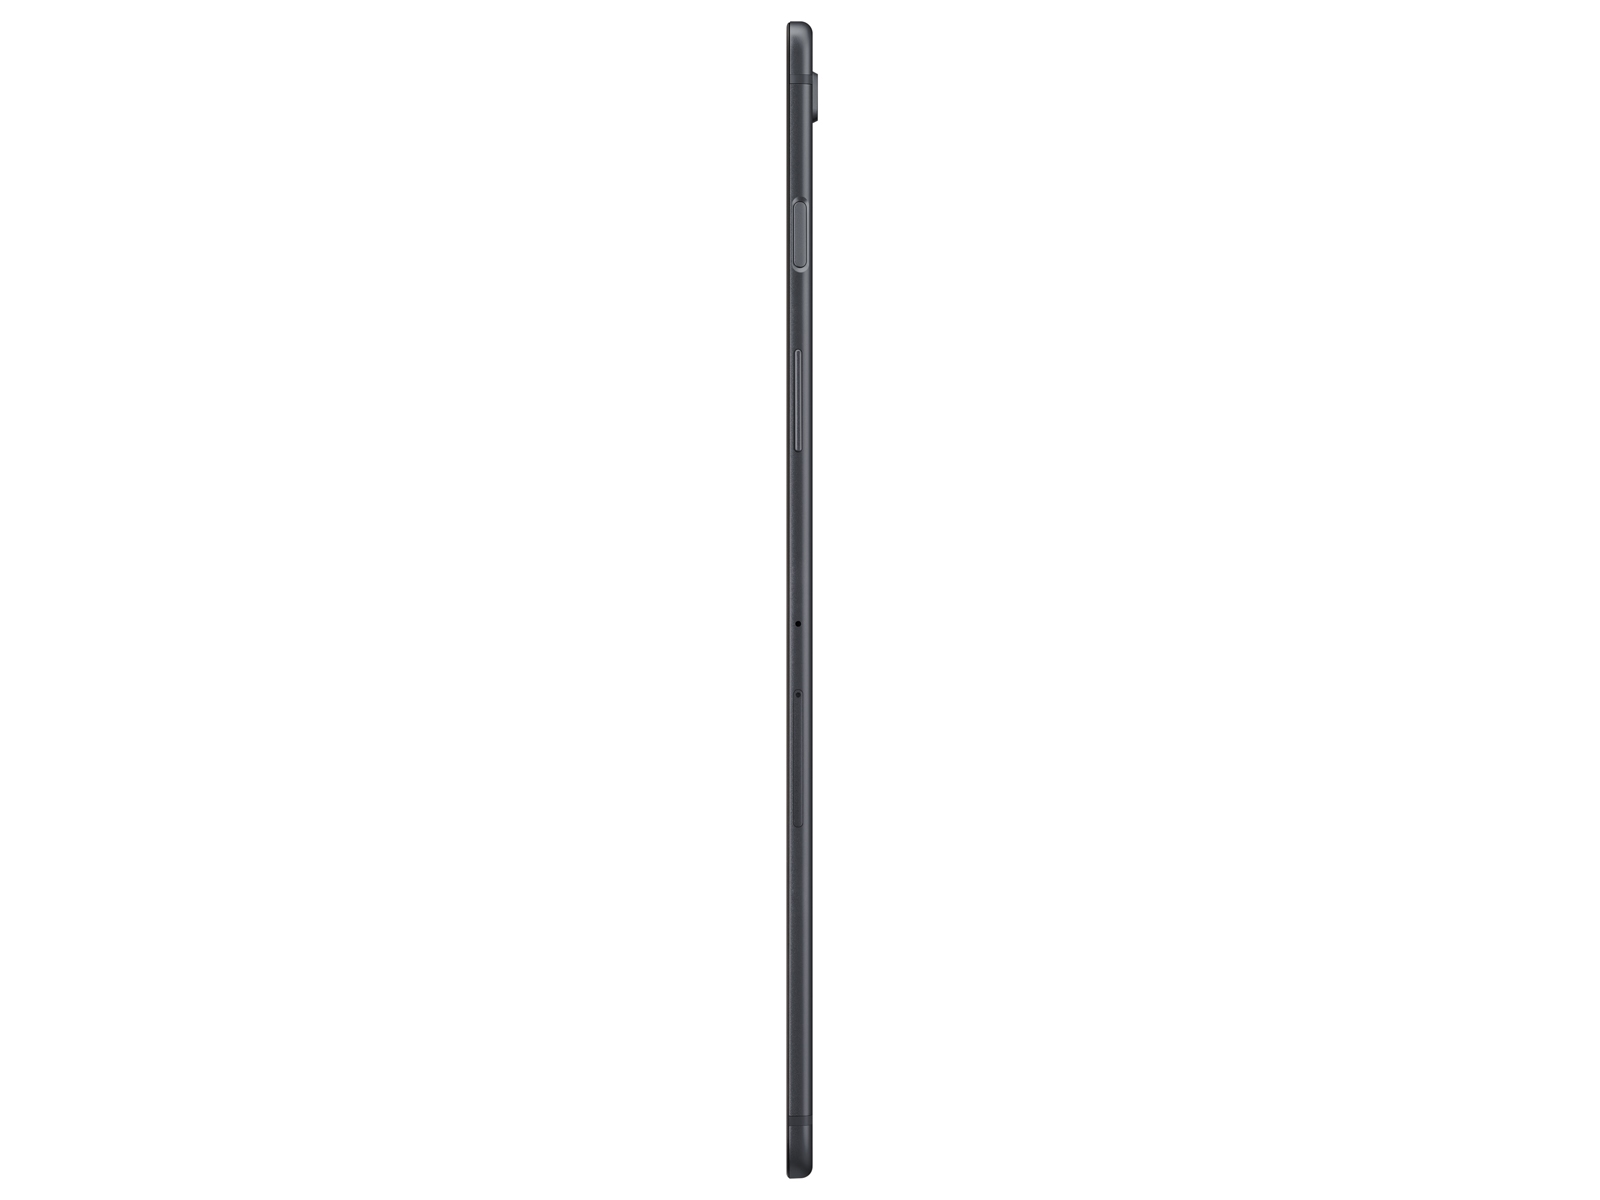 Thumbnail image of Galaxy Tab S5e 10.5”, 64GB, Black (AT&T)